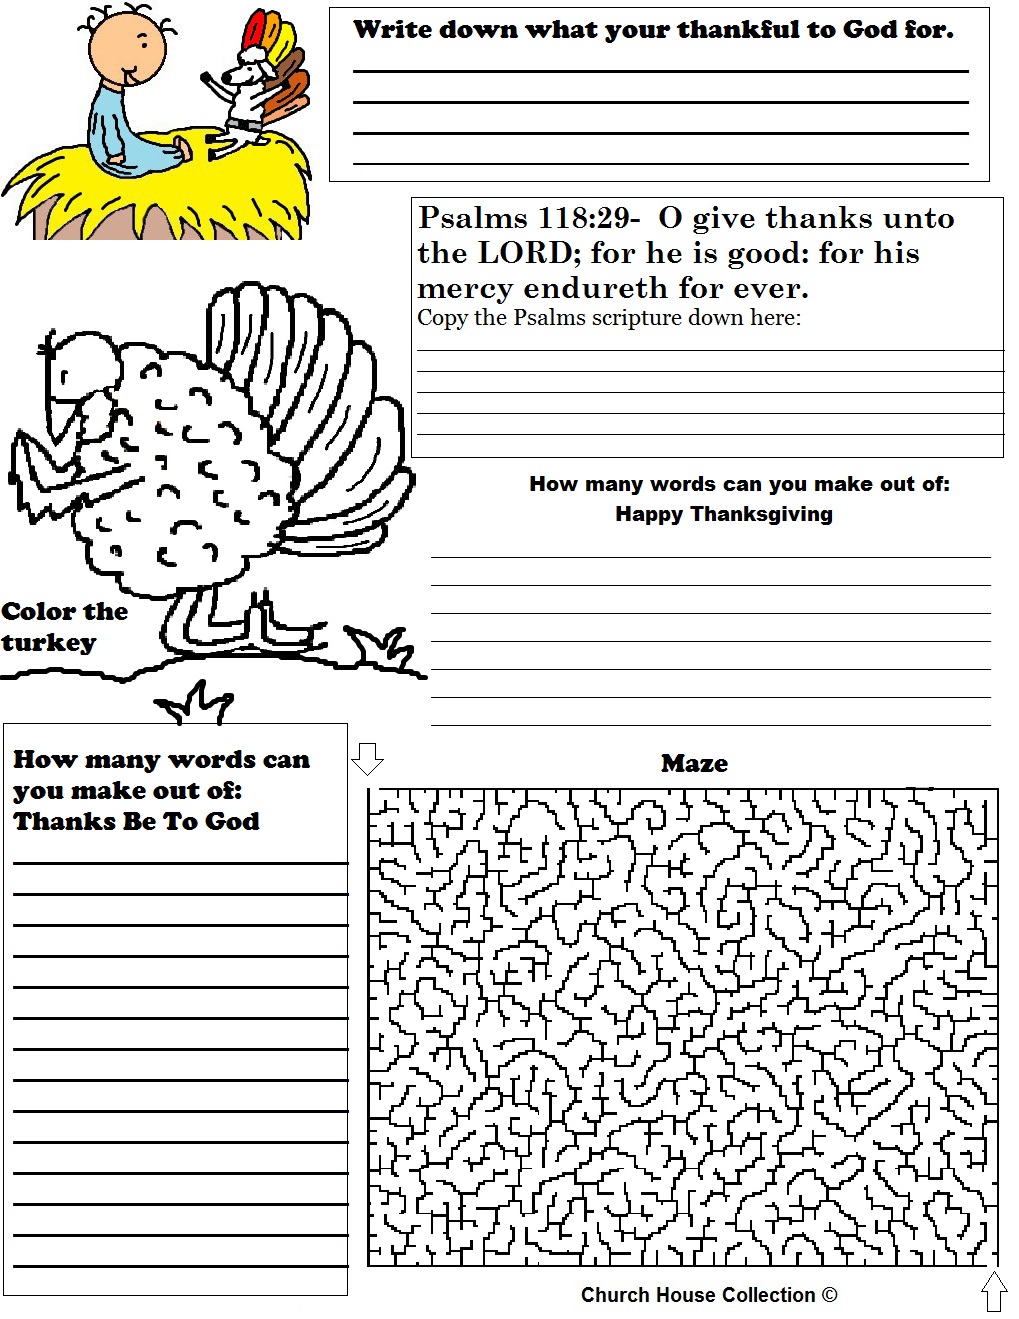 Church House Collection Blog: Thanksgiving Activity Sheet